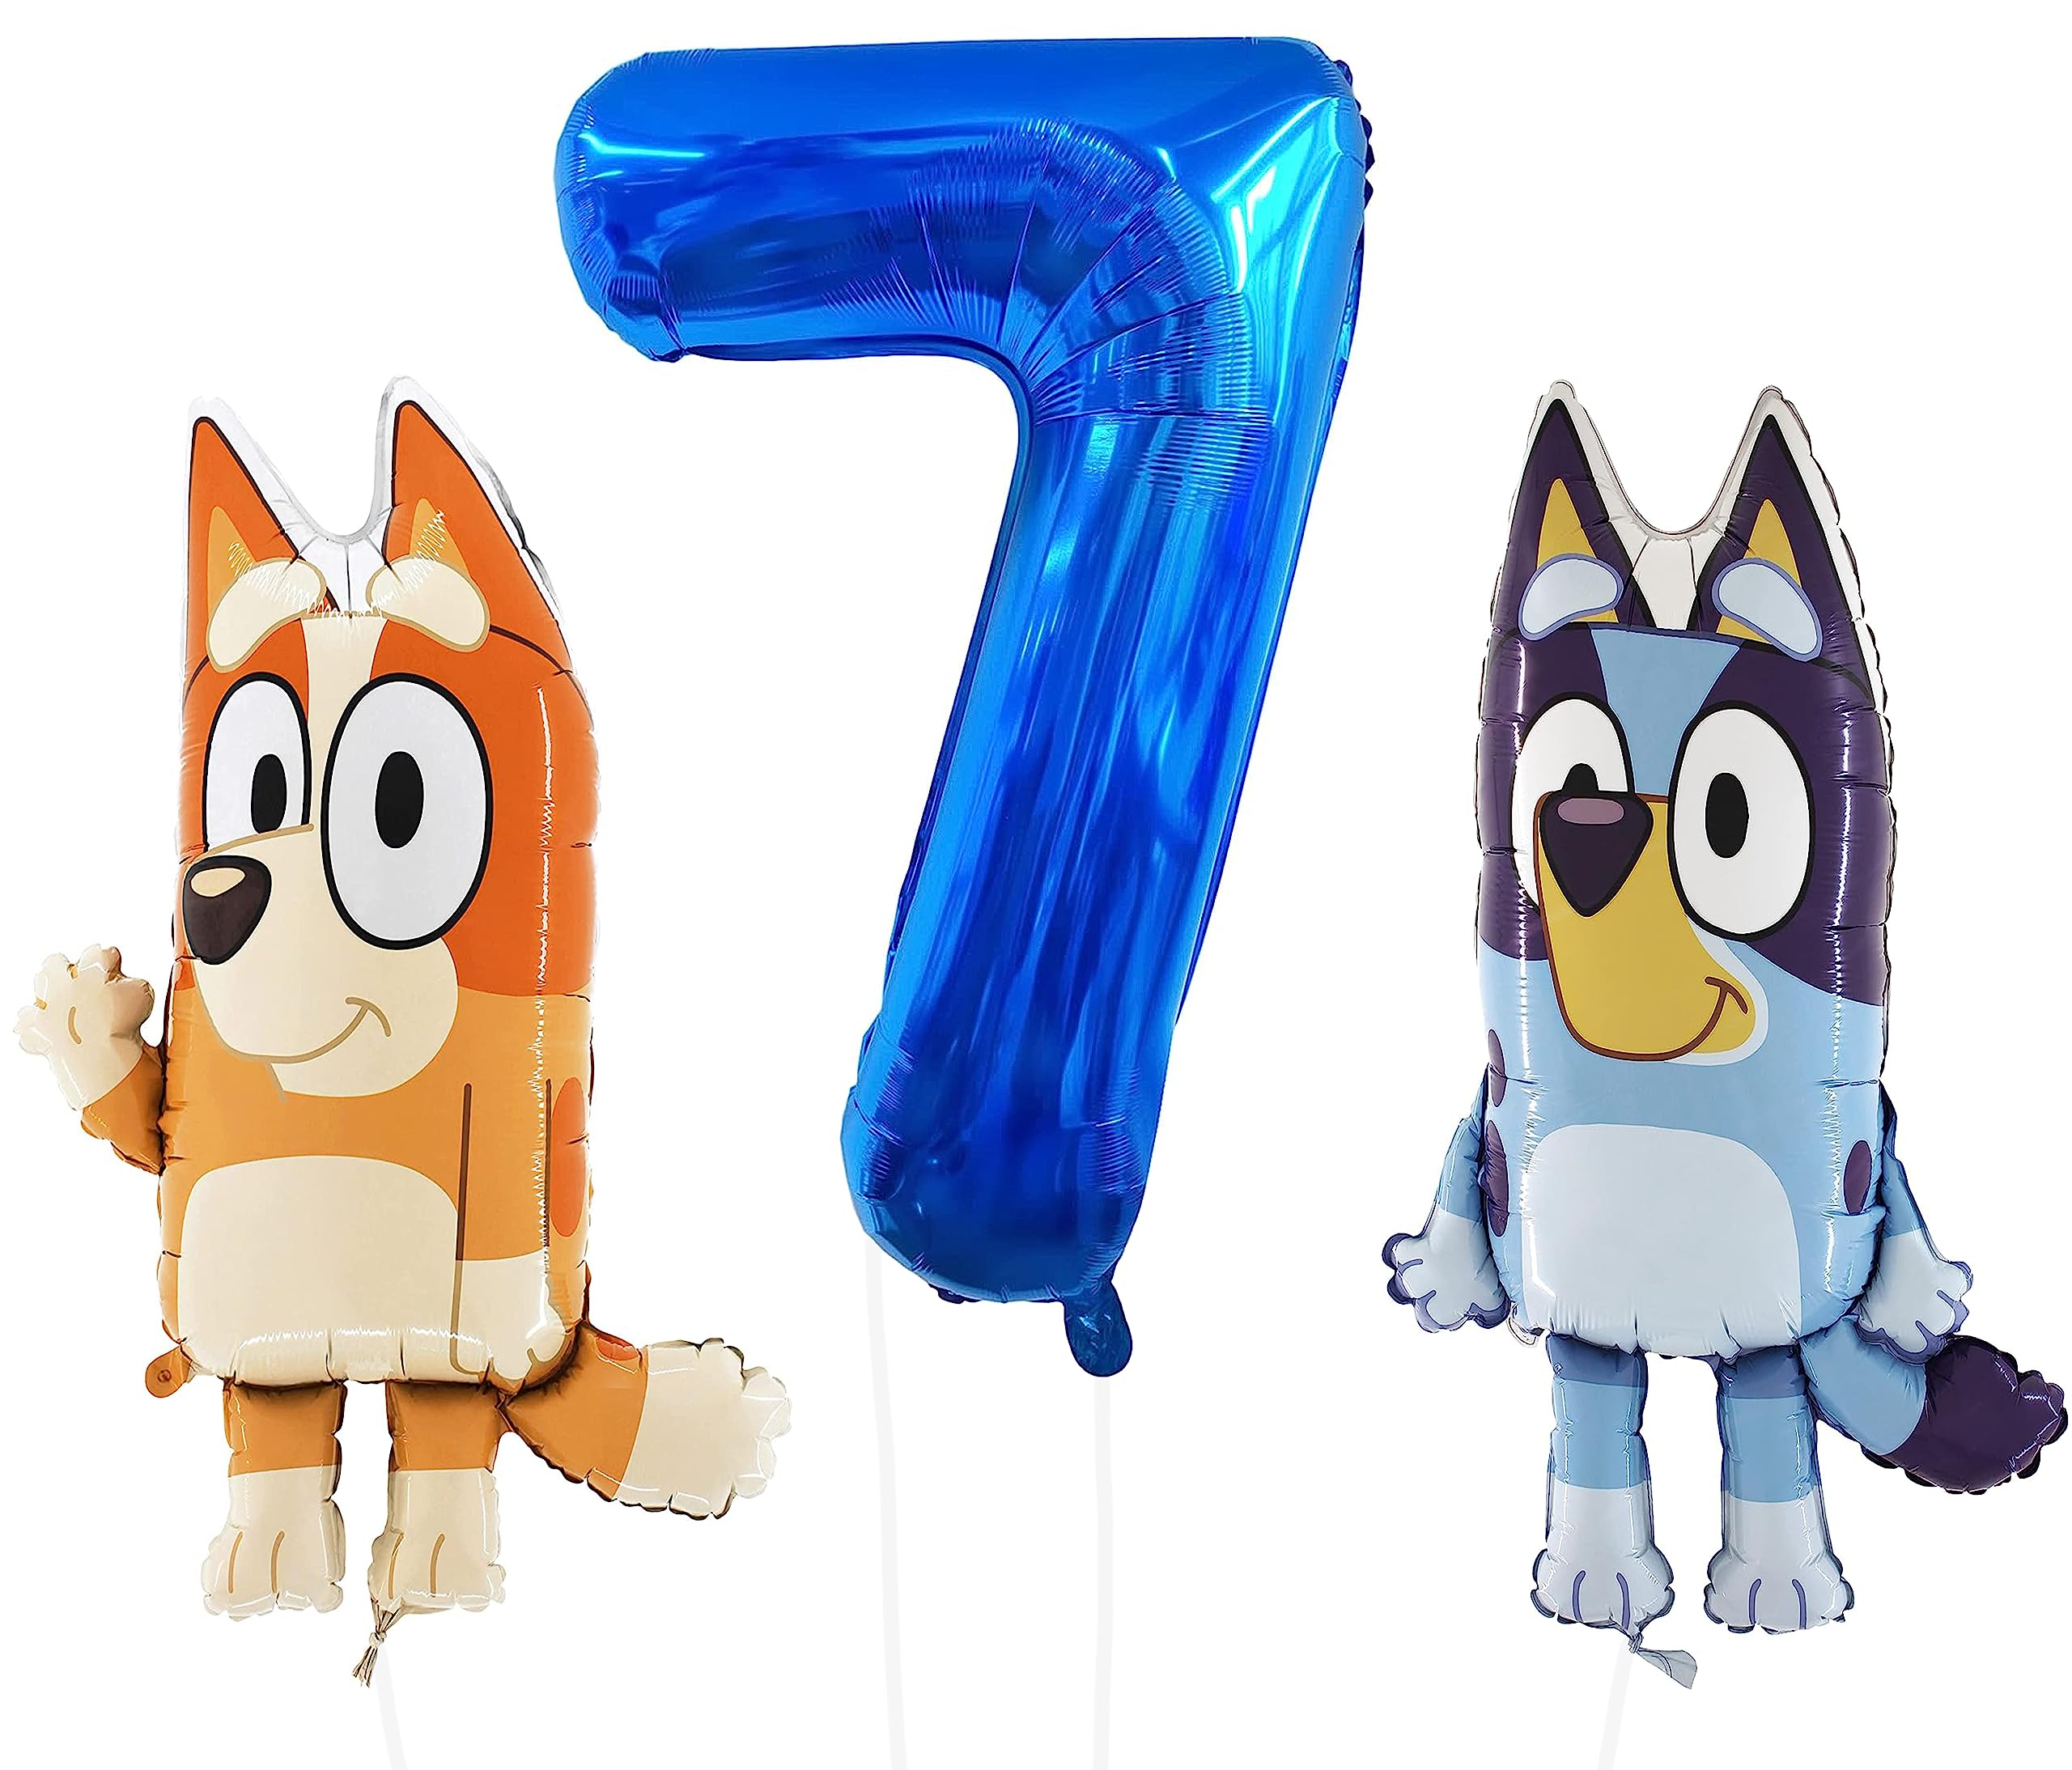 Toyland® Bluey & Bingo Folienballon-Set – 2 x 32-Zoll-Charakterballons und 1 x 40-Zoll-Zahlenballon – Partydekorationen für Kinder